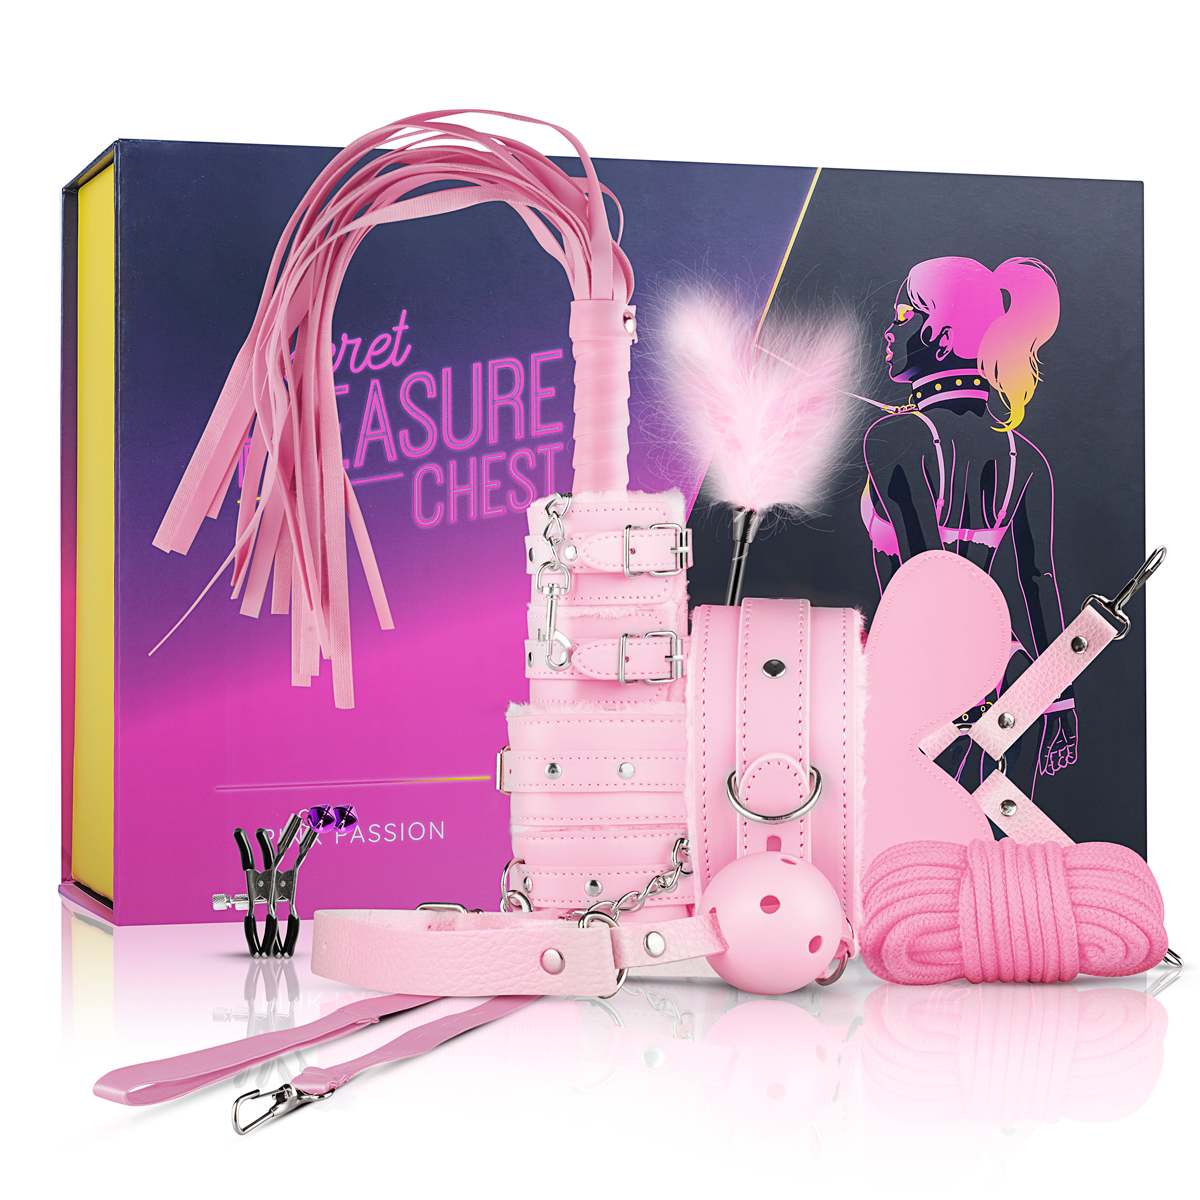 Secret Pleasure Chest - Secret Pleasure Chest - Pink Pleasure